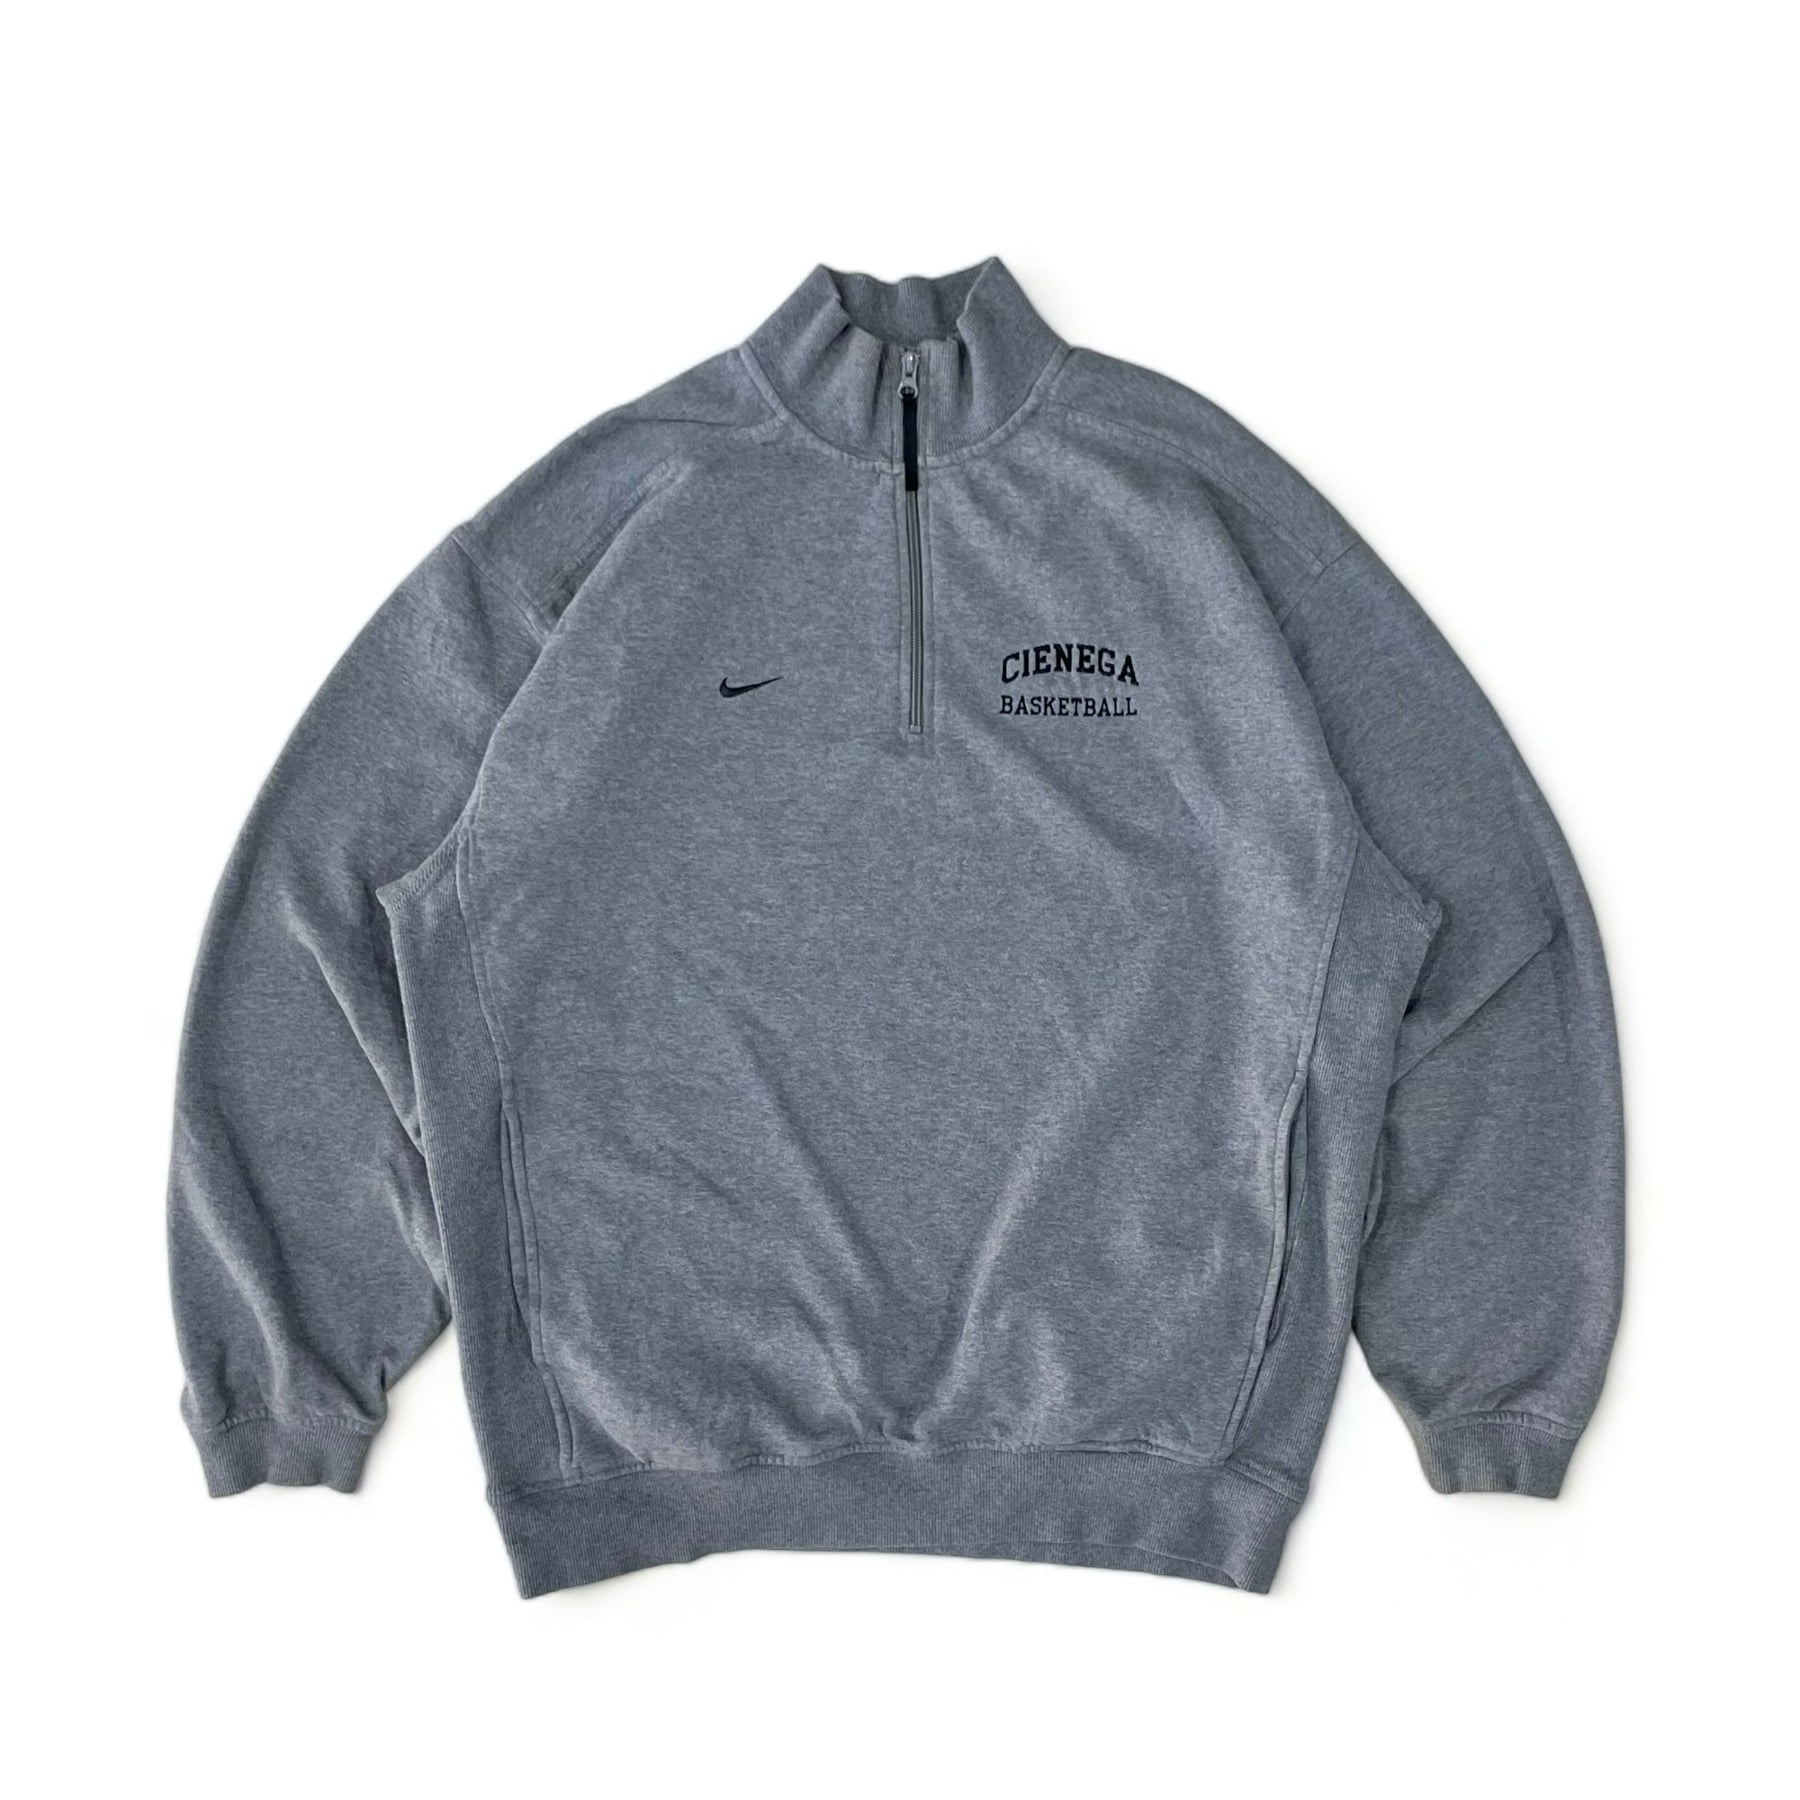 2008 NIKE 1/4 Zip Pullover Sweatshirt - L